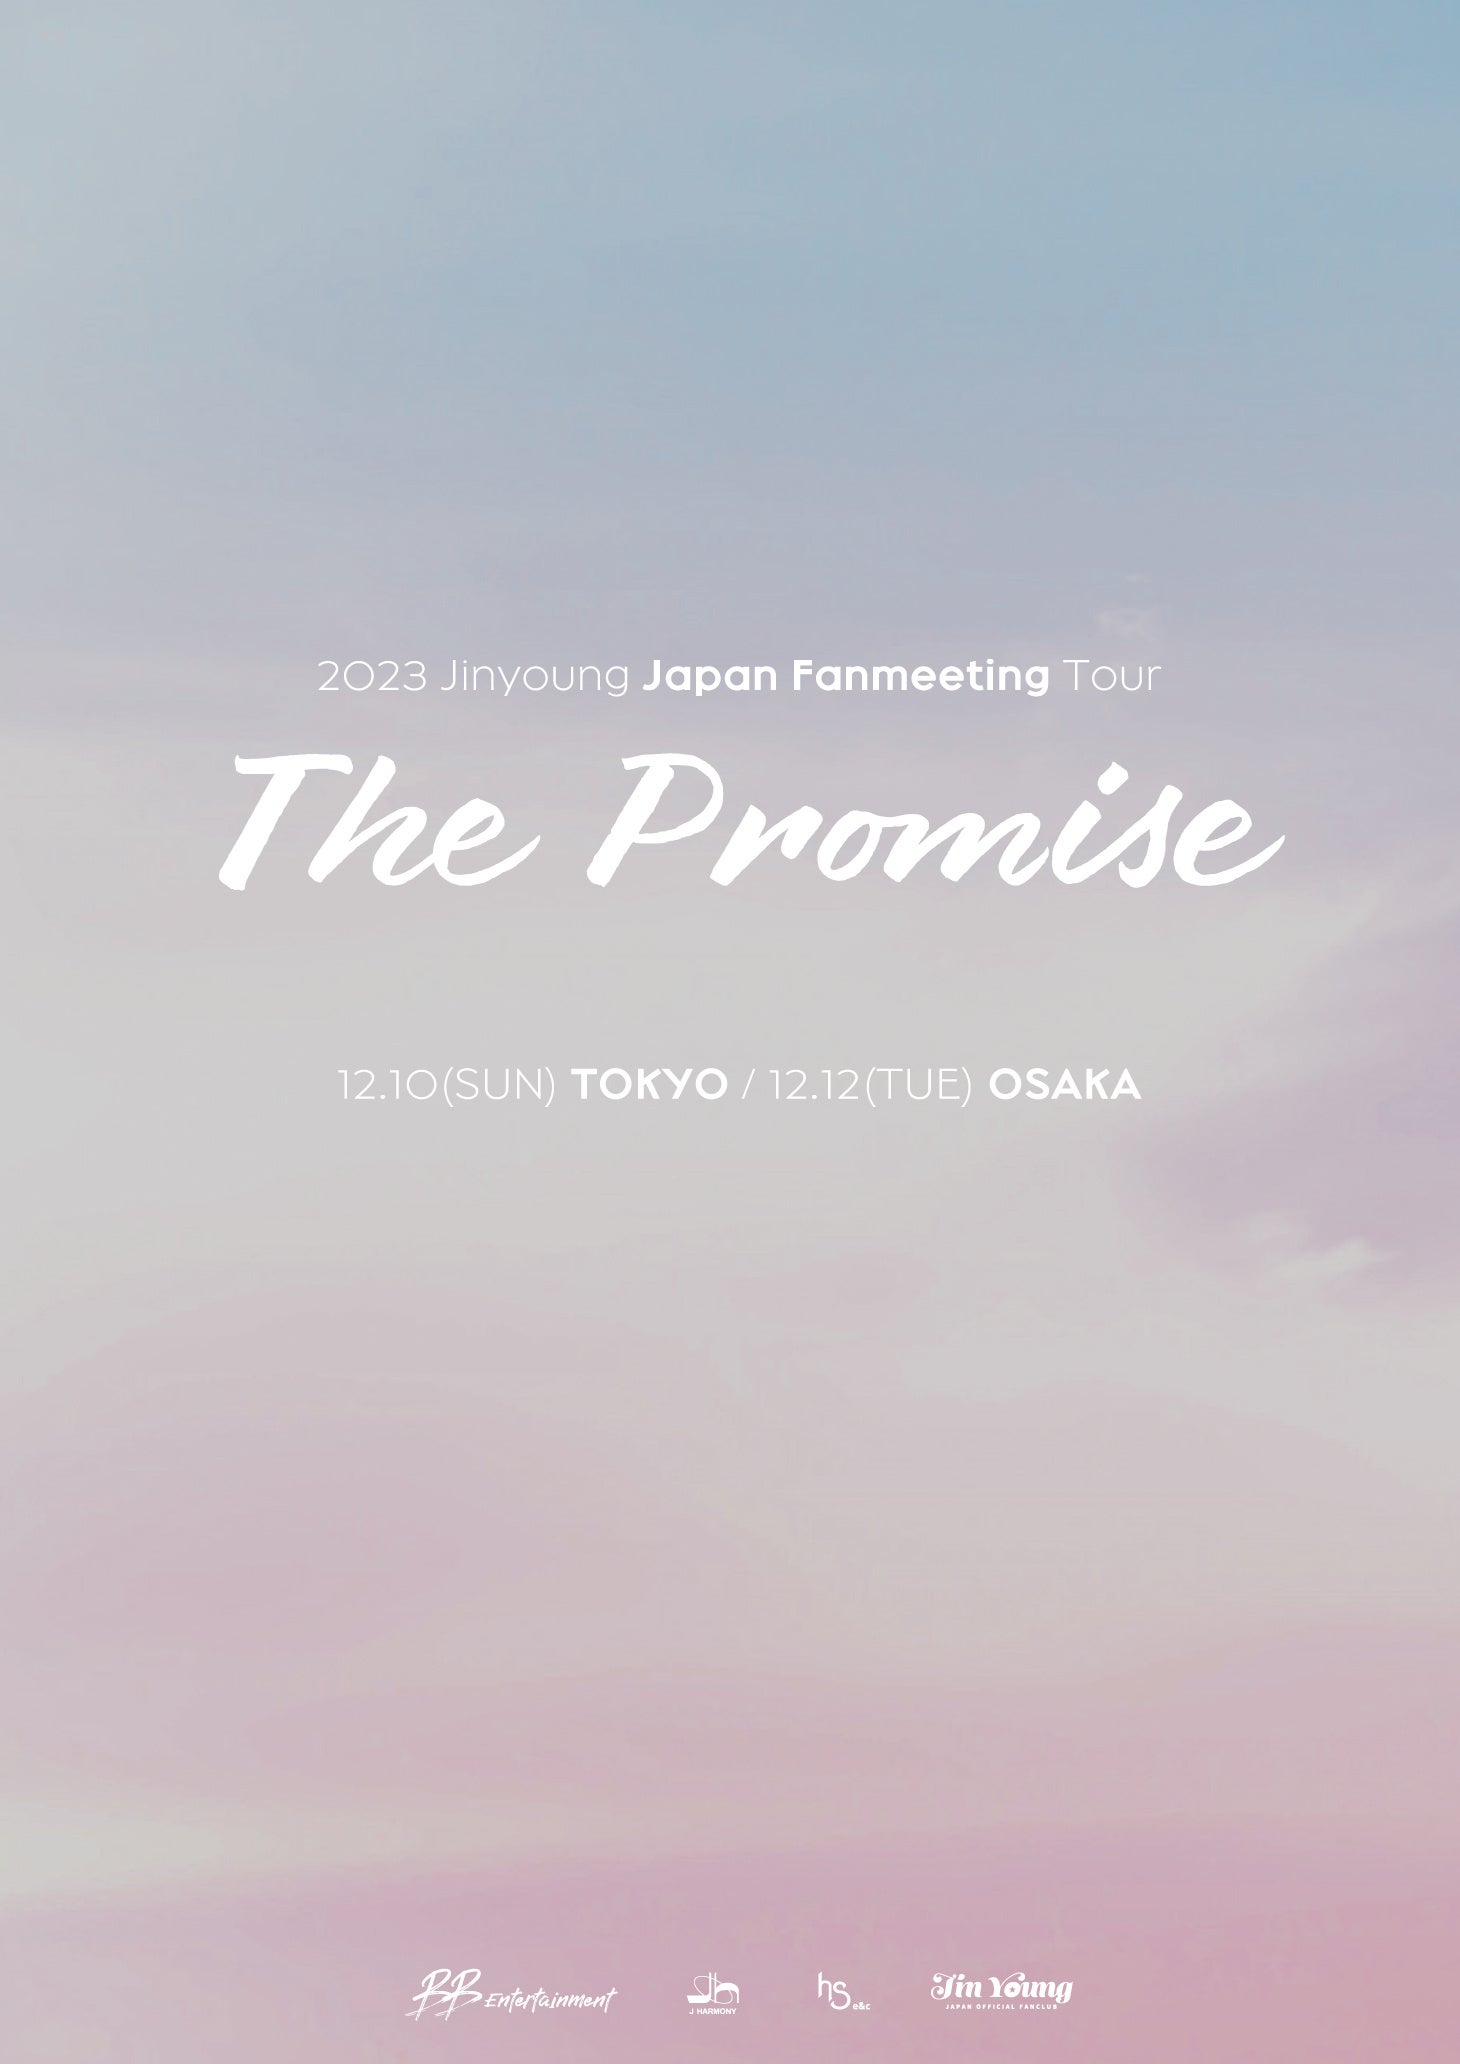 u2023 Jinyoung Japan Fanmeeting Tour qSWEET PROMISErvJÌI